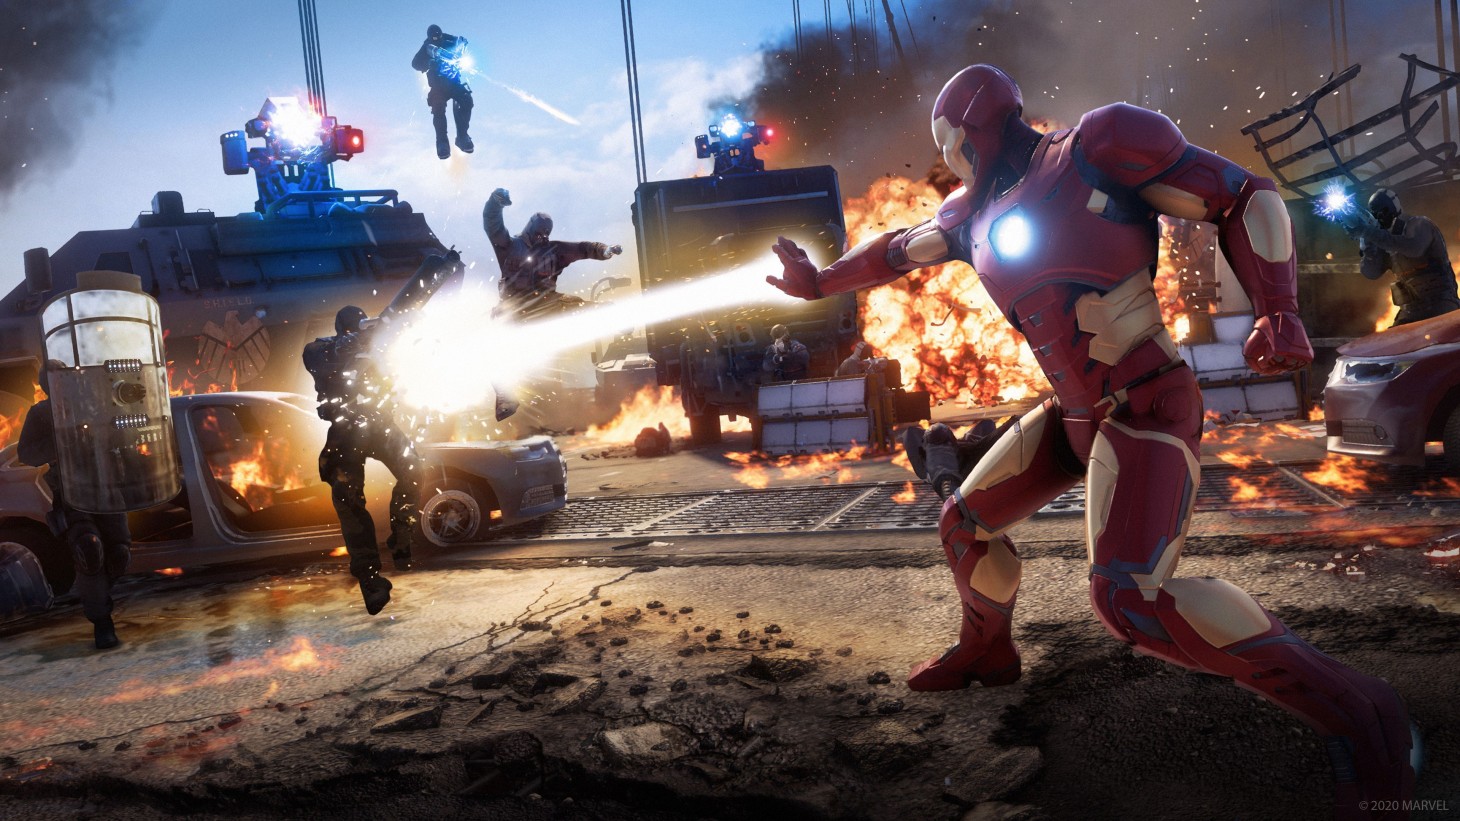 Se filtra listado de héroes (sin anunciar) que llegarán a Marvel’s Avengers2